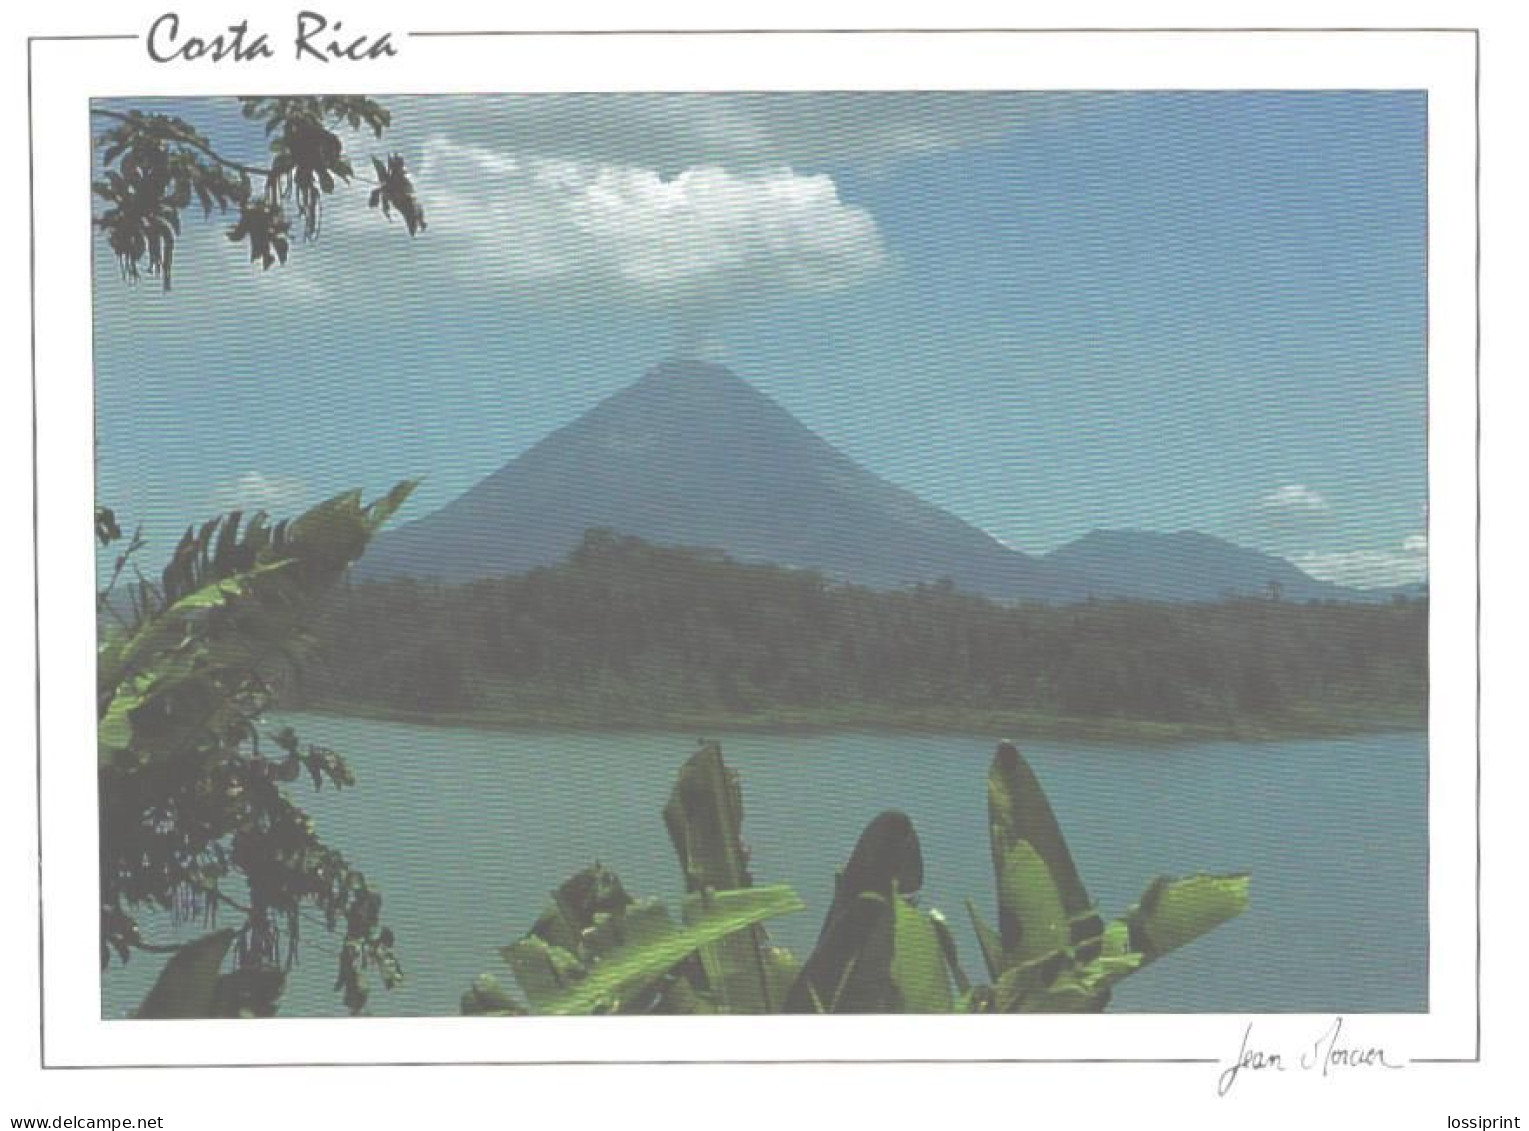 Costa Rica:Arenal Volcano National Park - Costa Rica